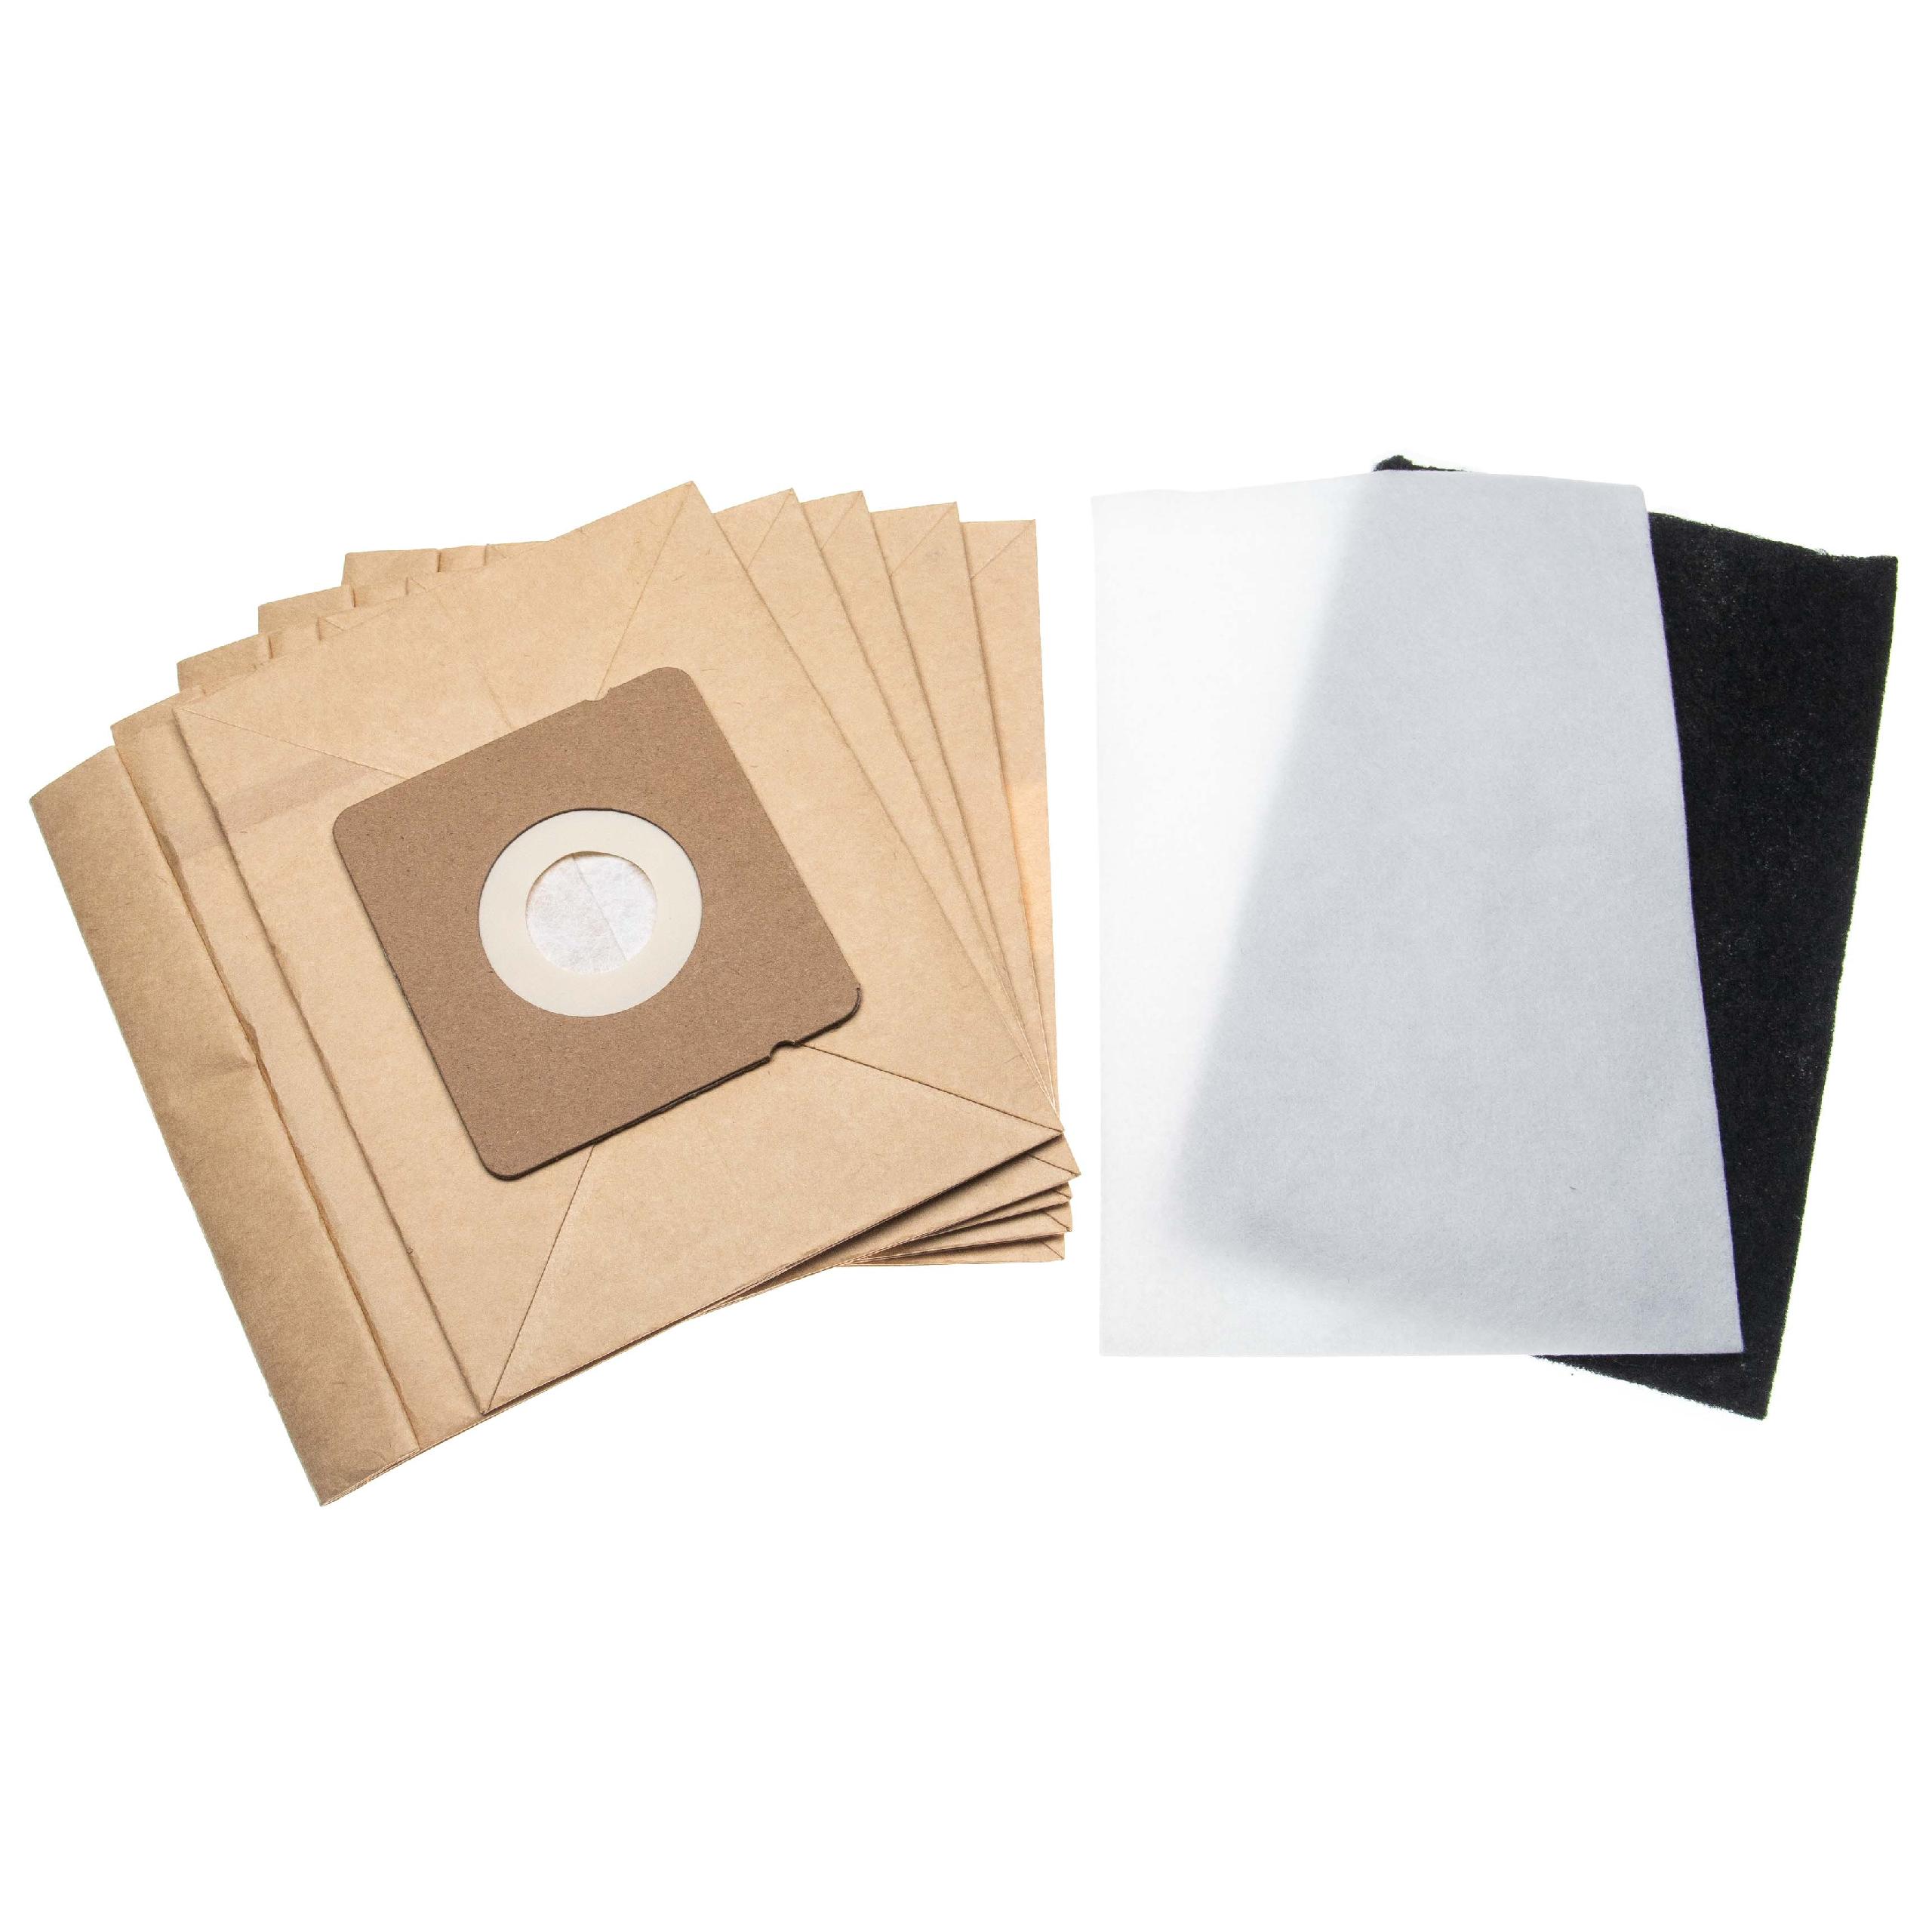 6-Part Filter + Paper Bag Set replaces Rowenta 832696, 900196441/1, 900 19 58-45/4 for Moulinex Vacuum Cleaner